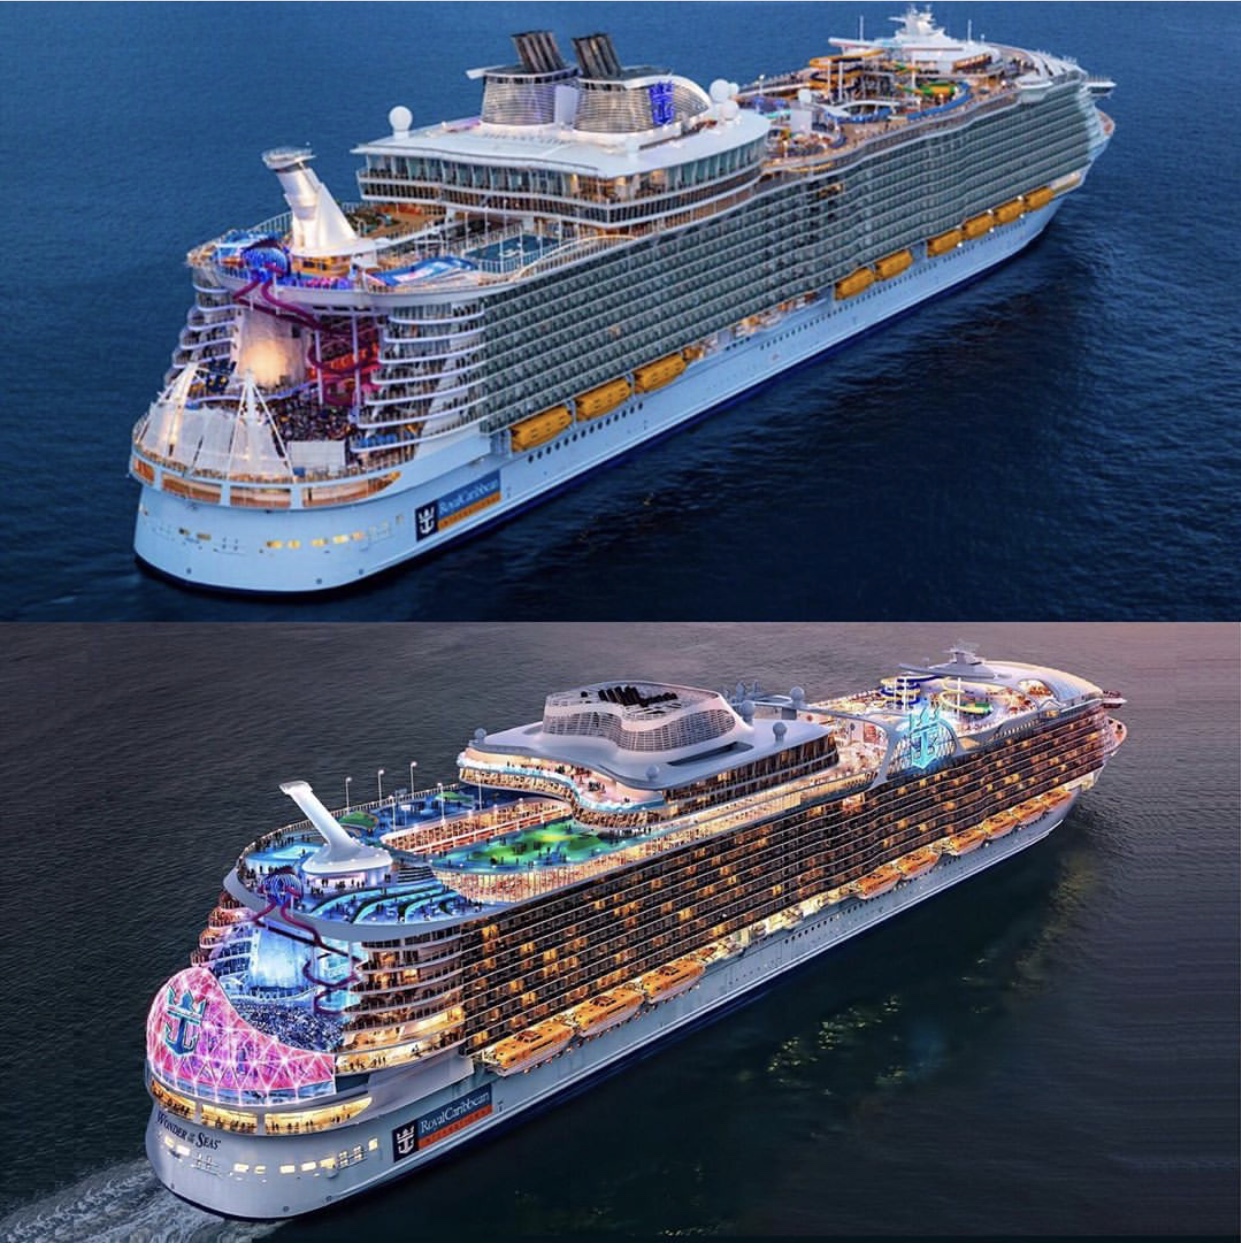 Royal Caribbean Cruise Ships Oasis Class Cruise Everyday